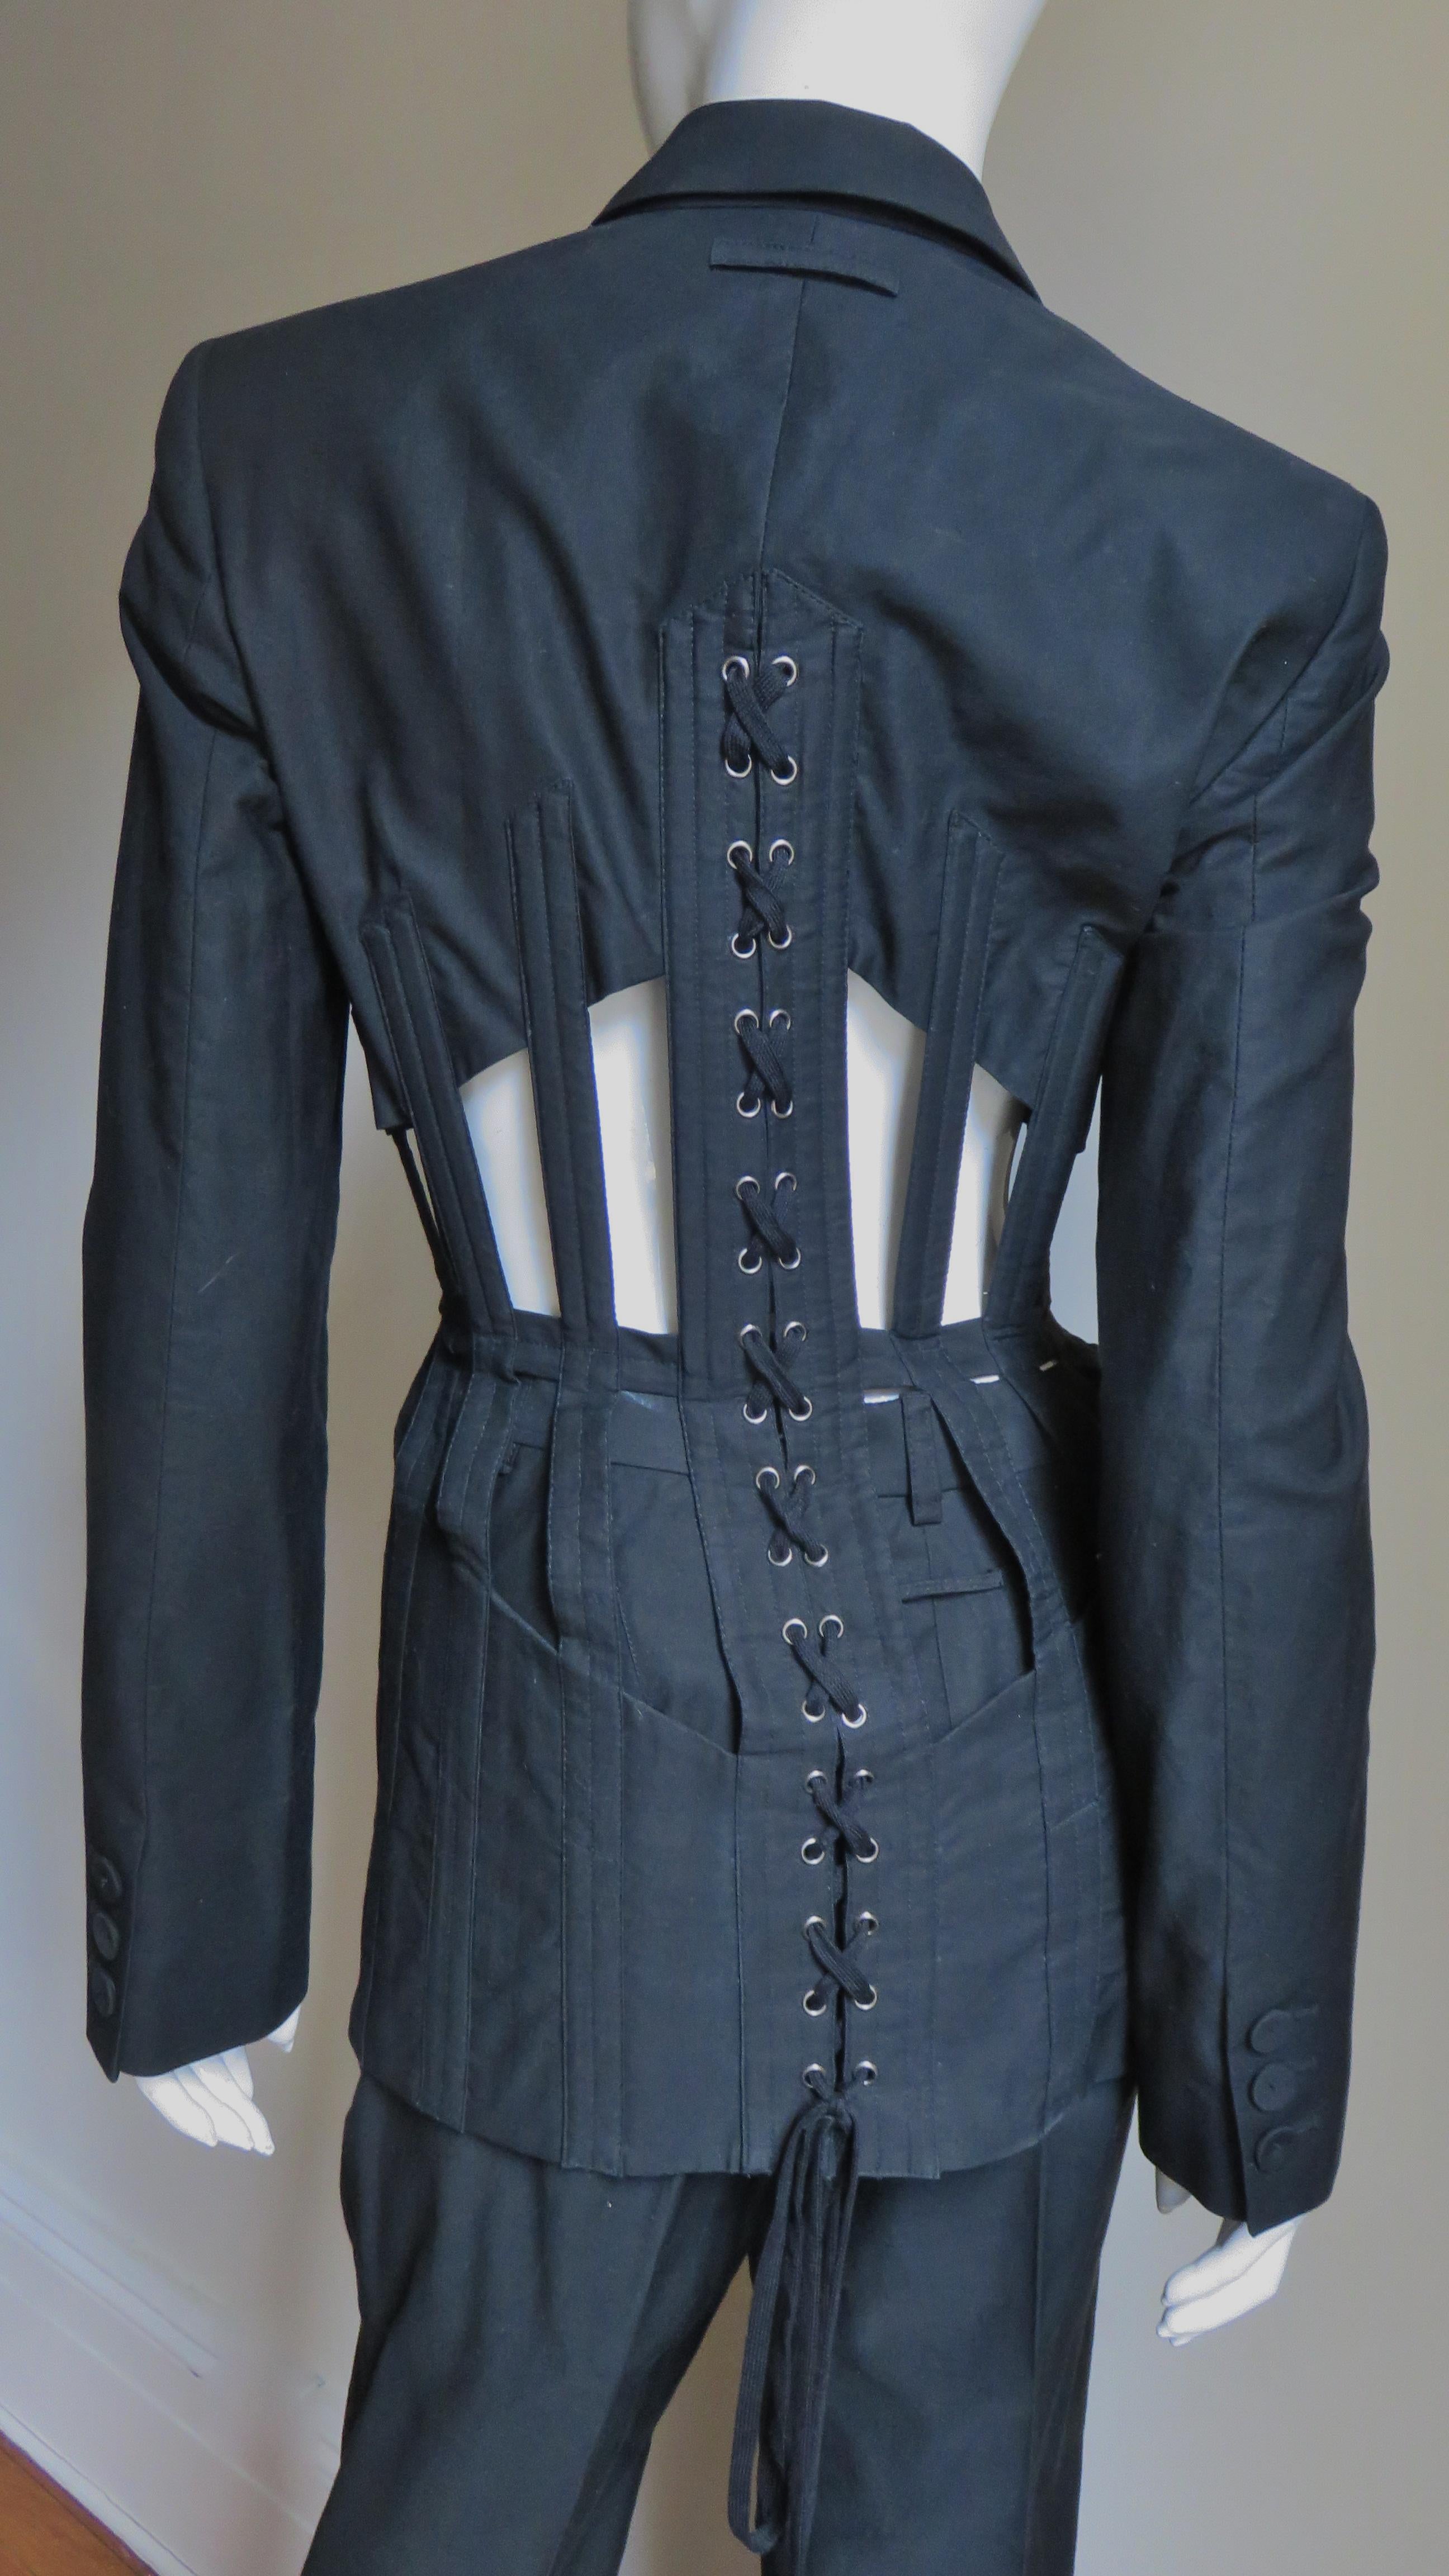 Jean Paul Gaultier Iconic Cage Corset lace up Jacket Pant Suit S/S 1989 For Sale 8